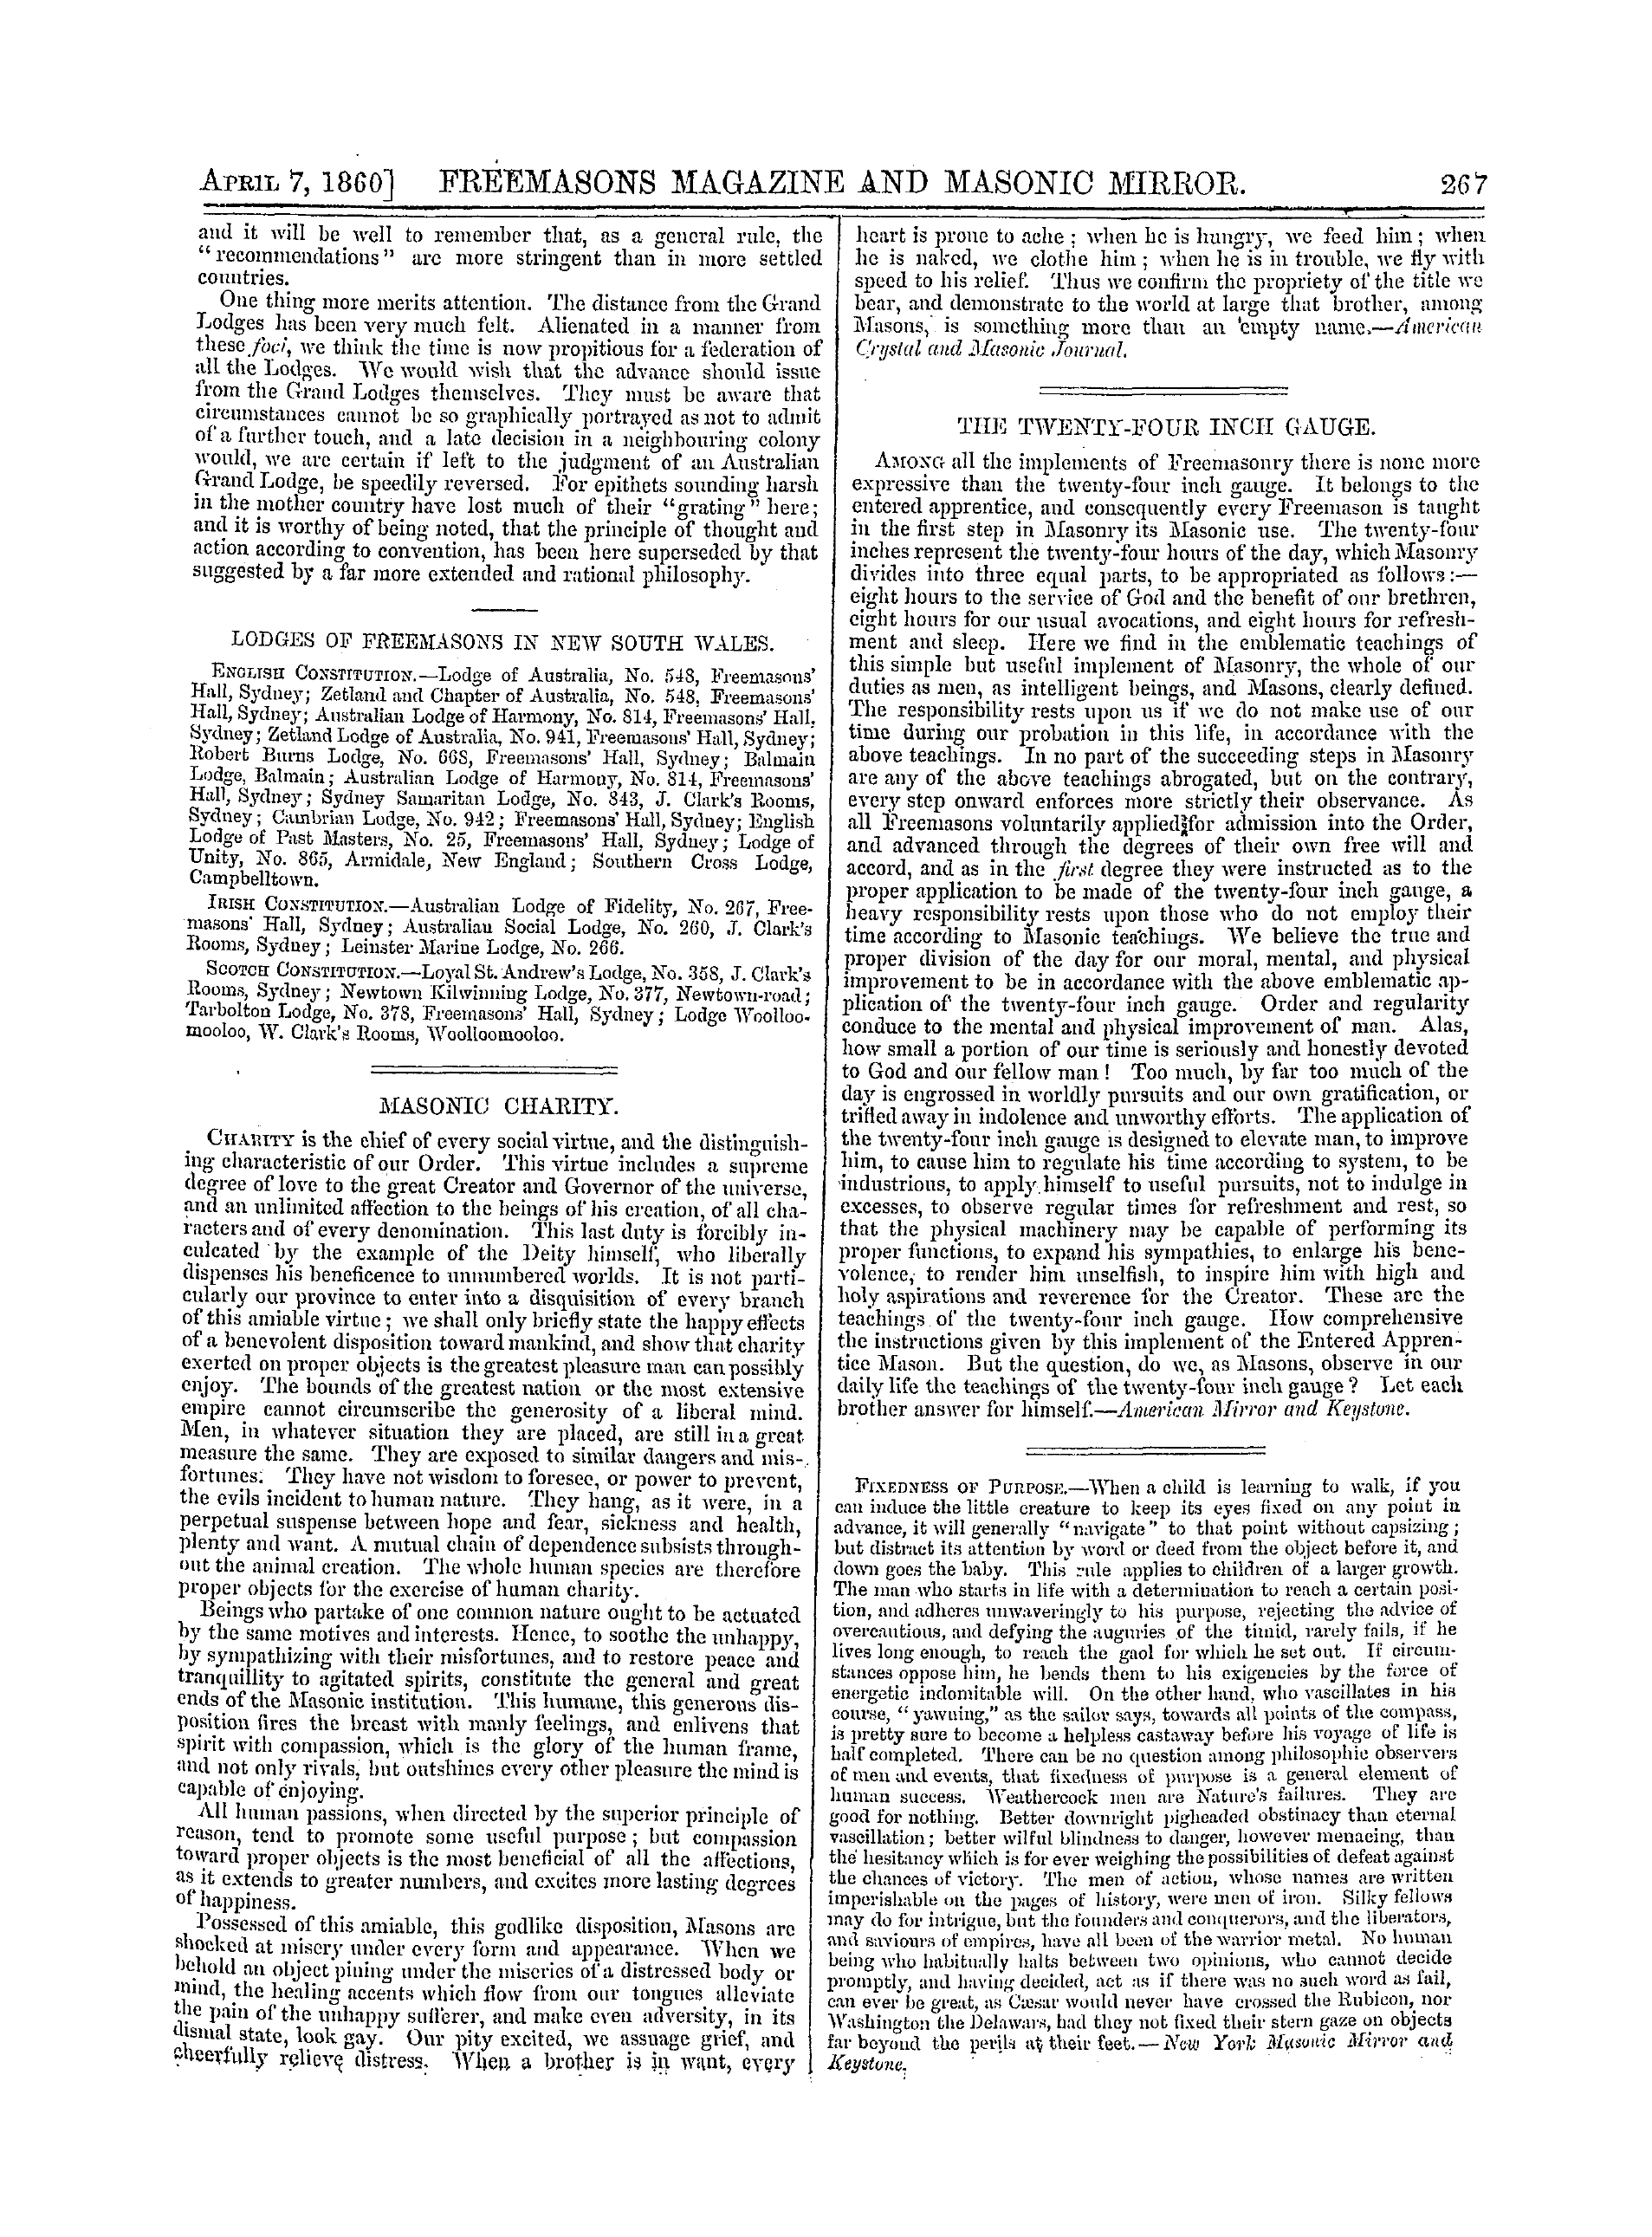 The Freemasons' Monthly Magazine: 1860-04-07 - Freemasonry In New South Wales.